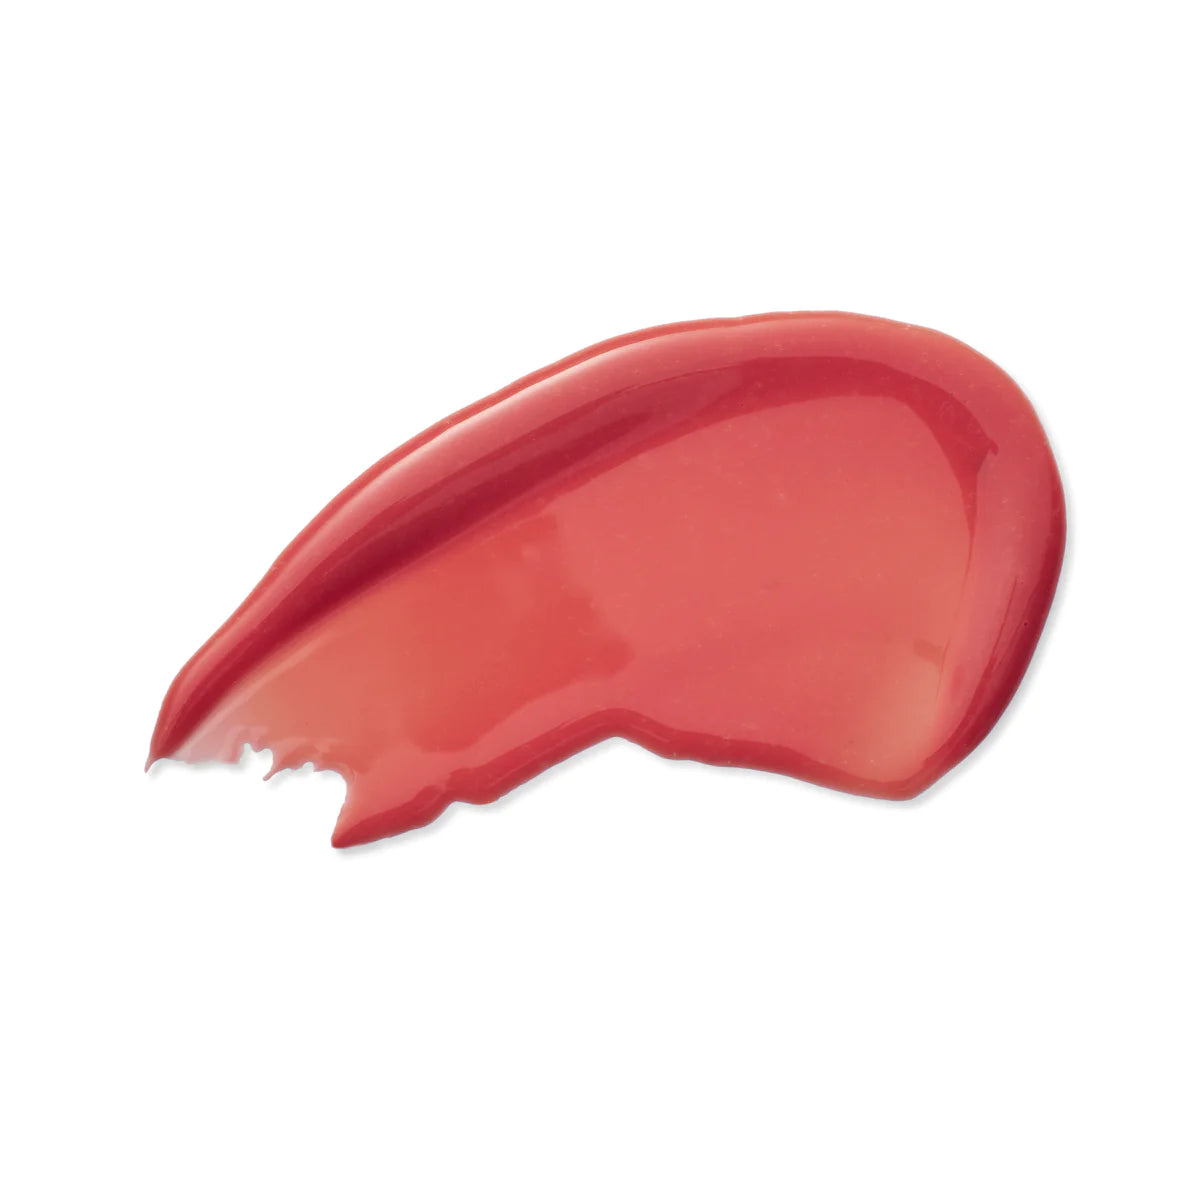 Decadent Lustre Phat X Jucicy Plumping Lip Gloss - Ravishing